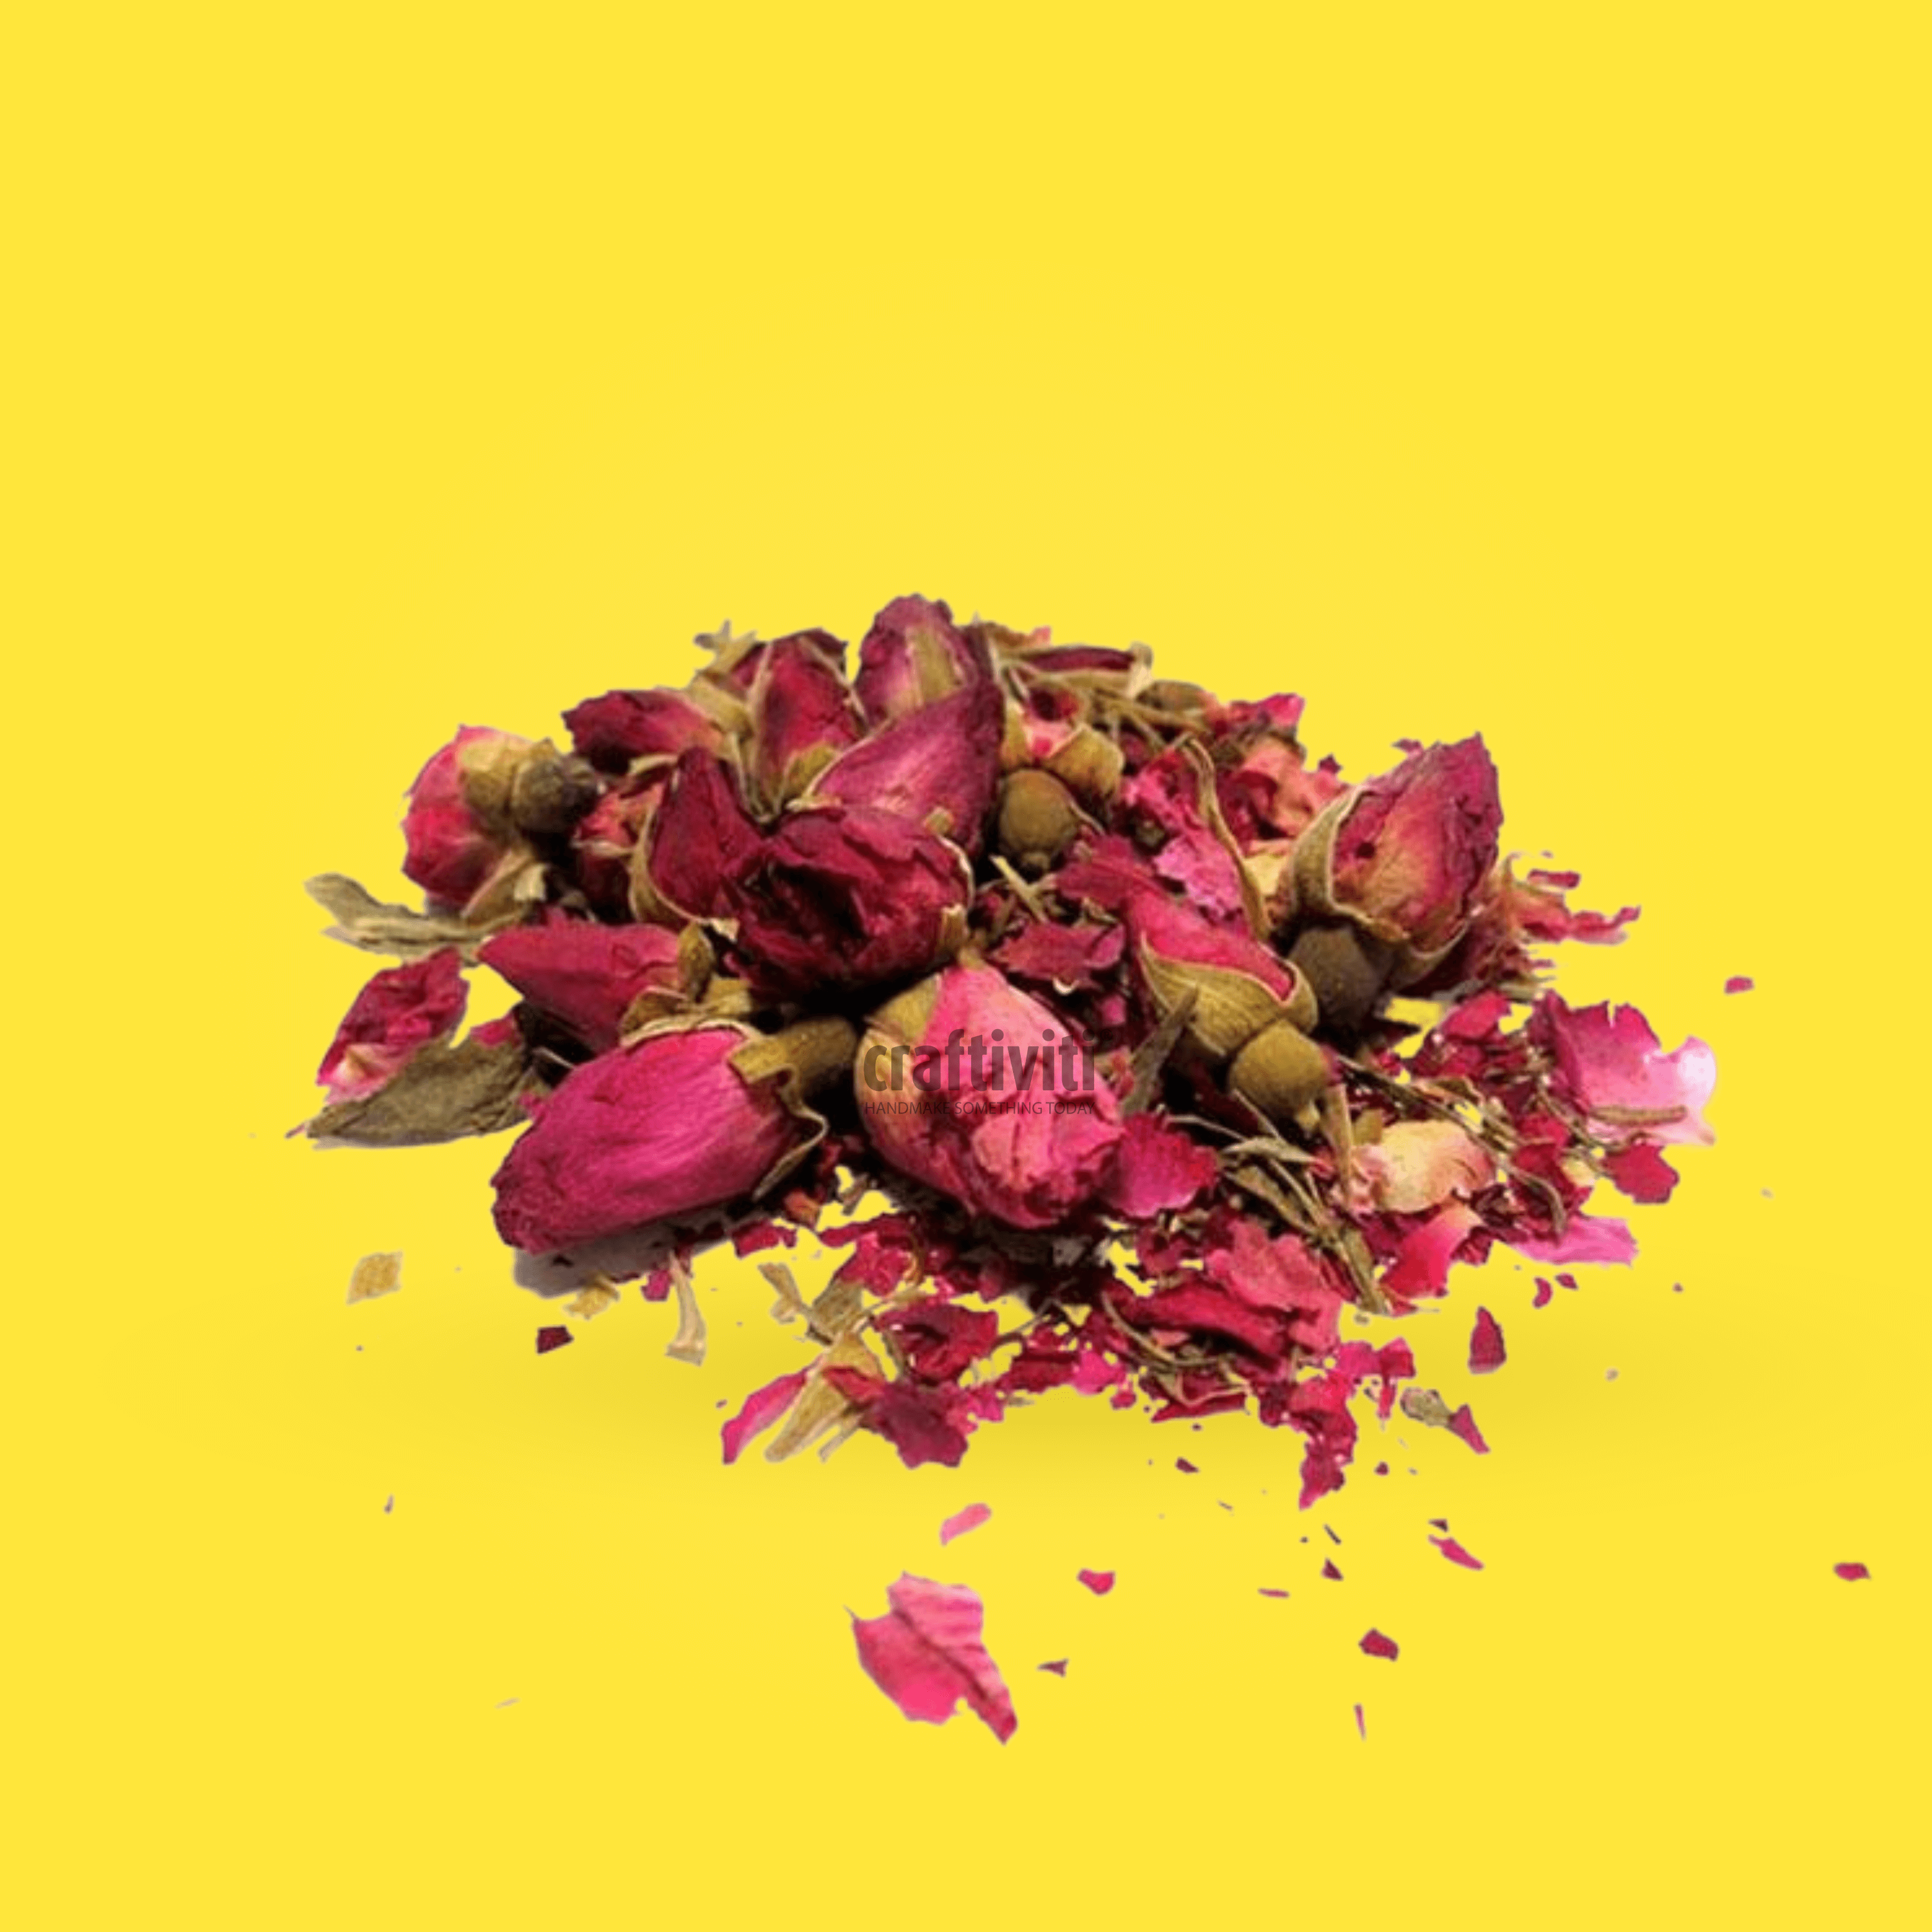 Dried Rose Petal Ingredients - Craftiviti